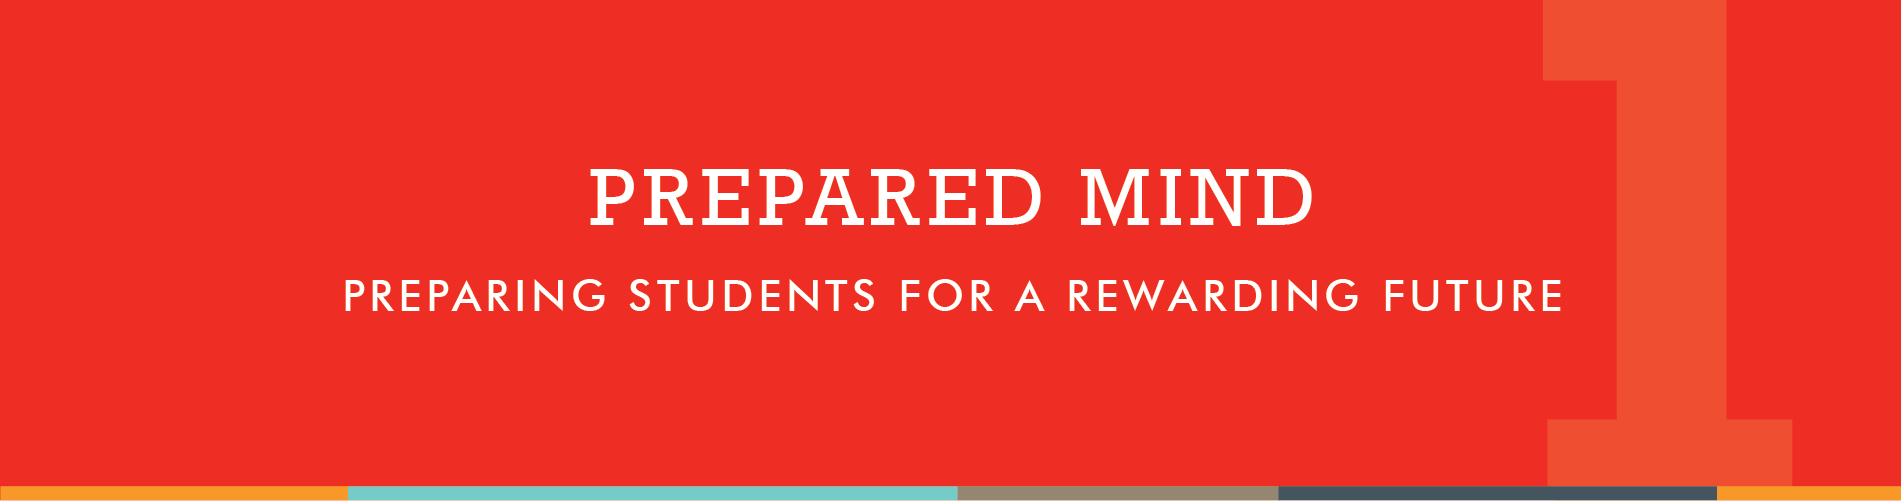 Prepared Mind: Preparing students for a rewarding future